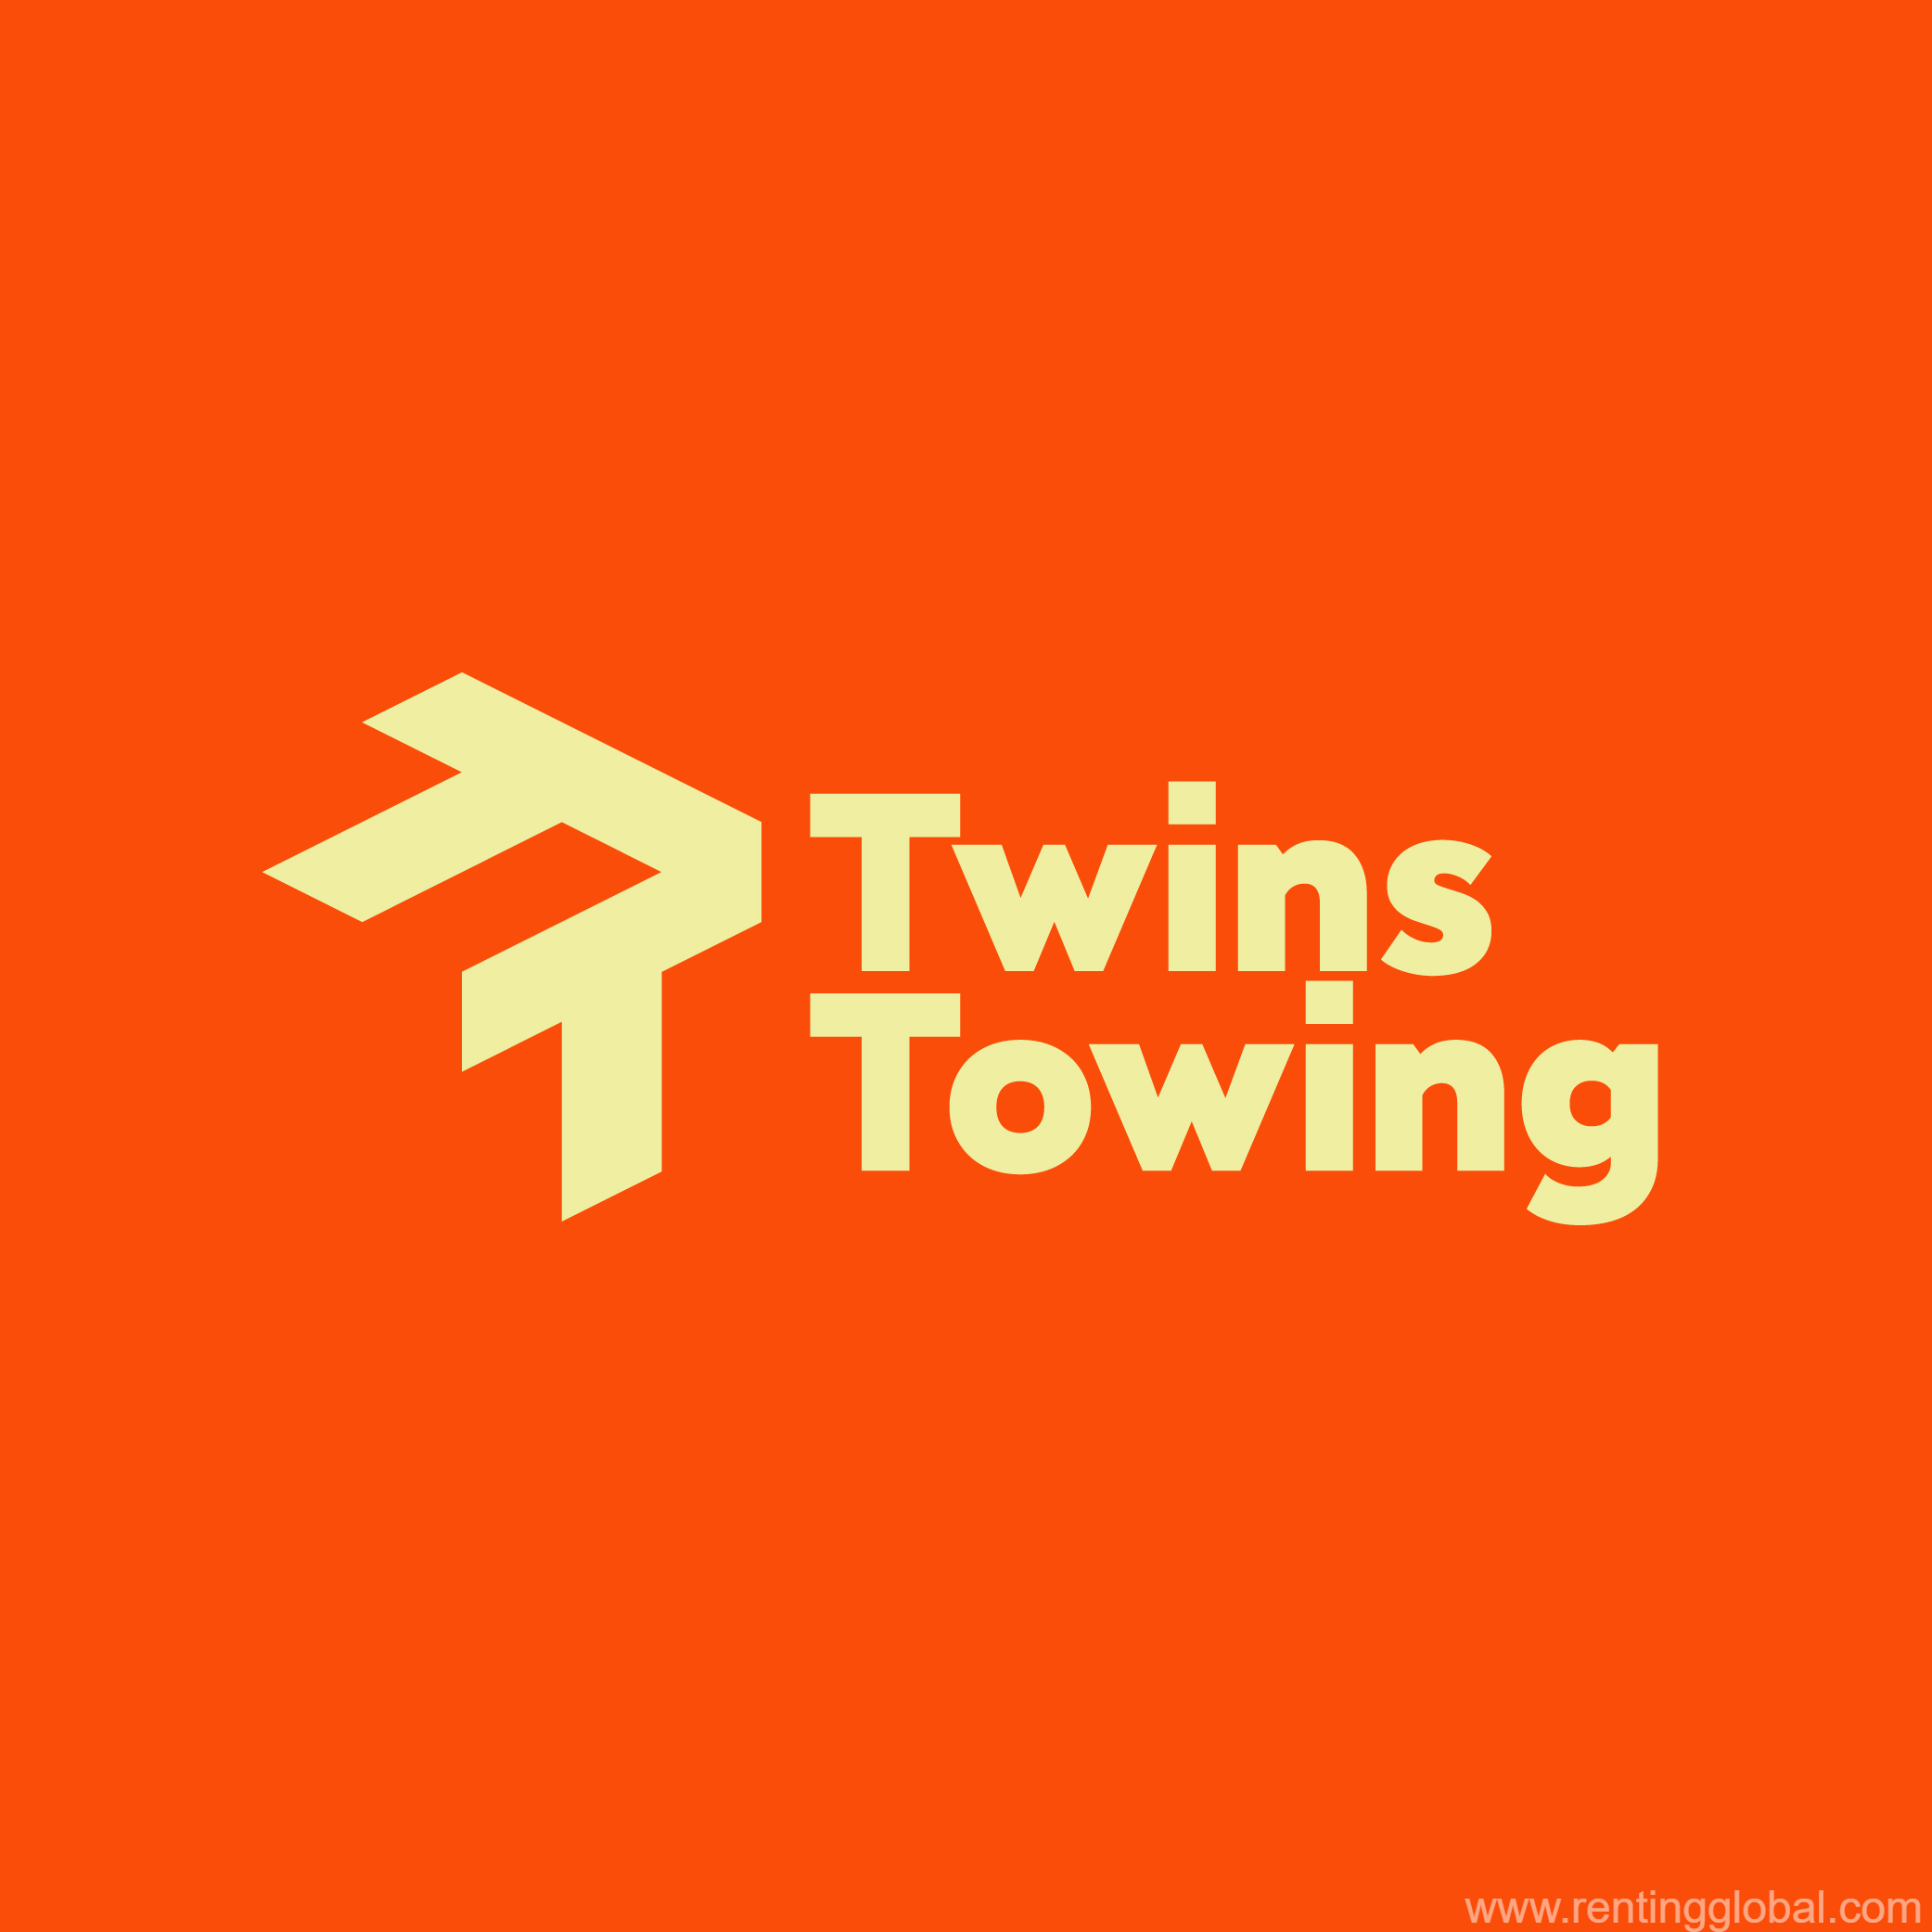 Twins Towing LLC